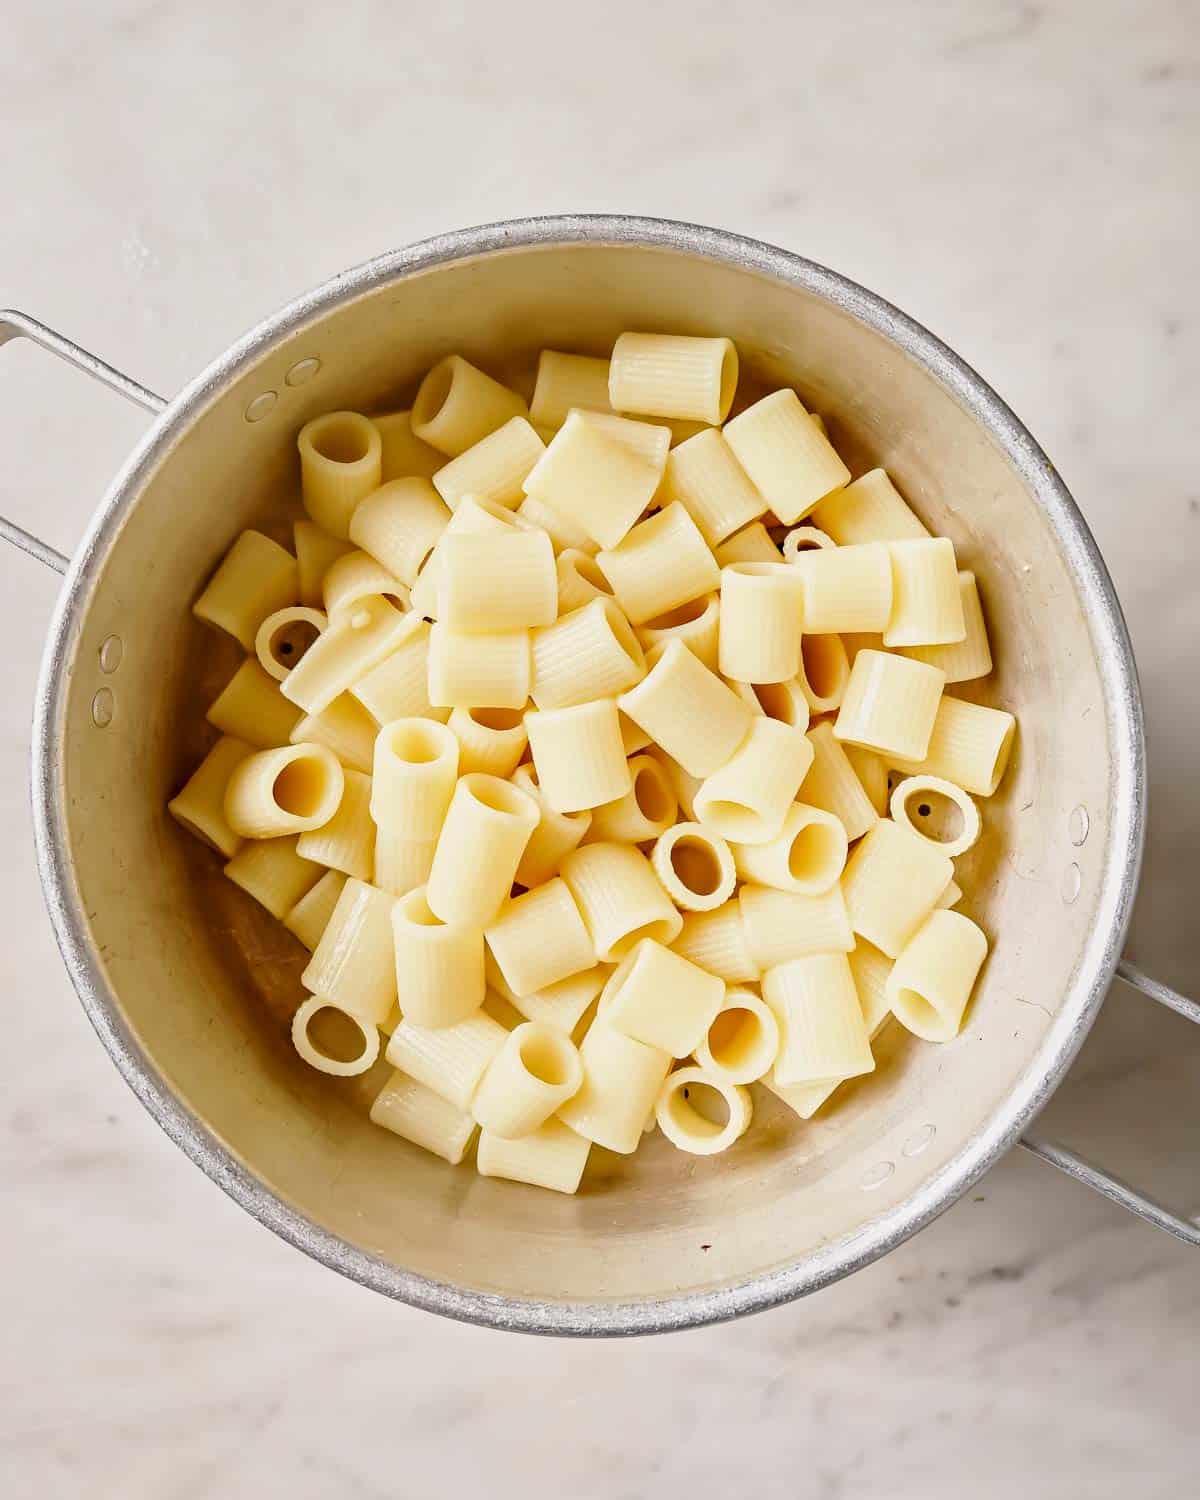 Cooked rigatoni pasta in a strainer.